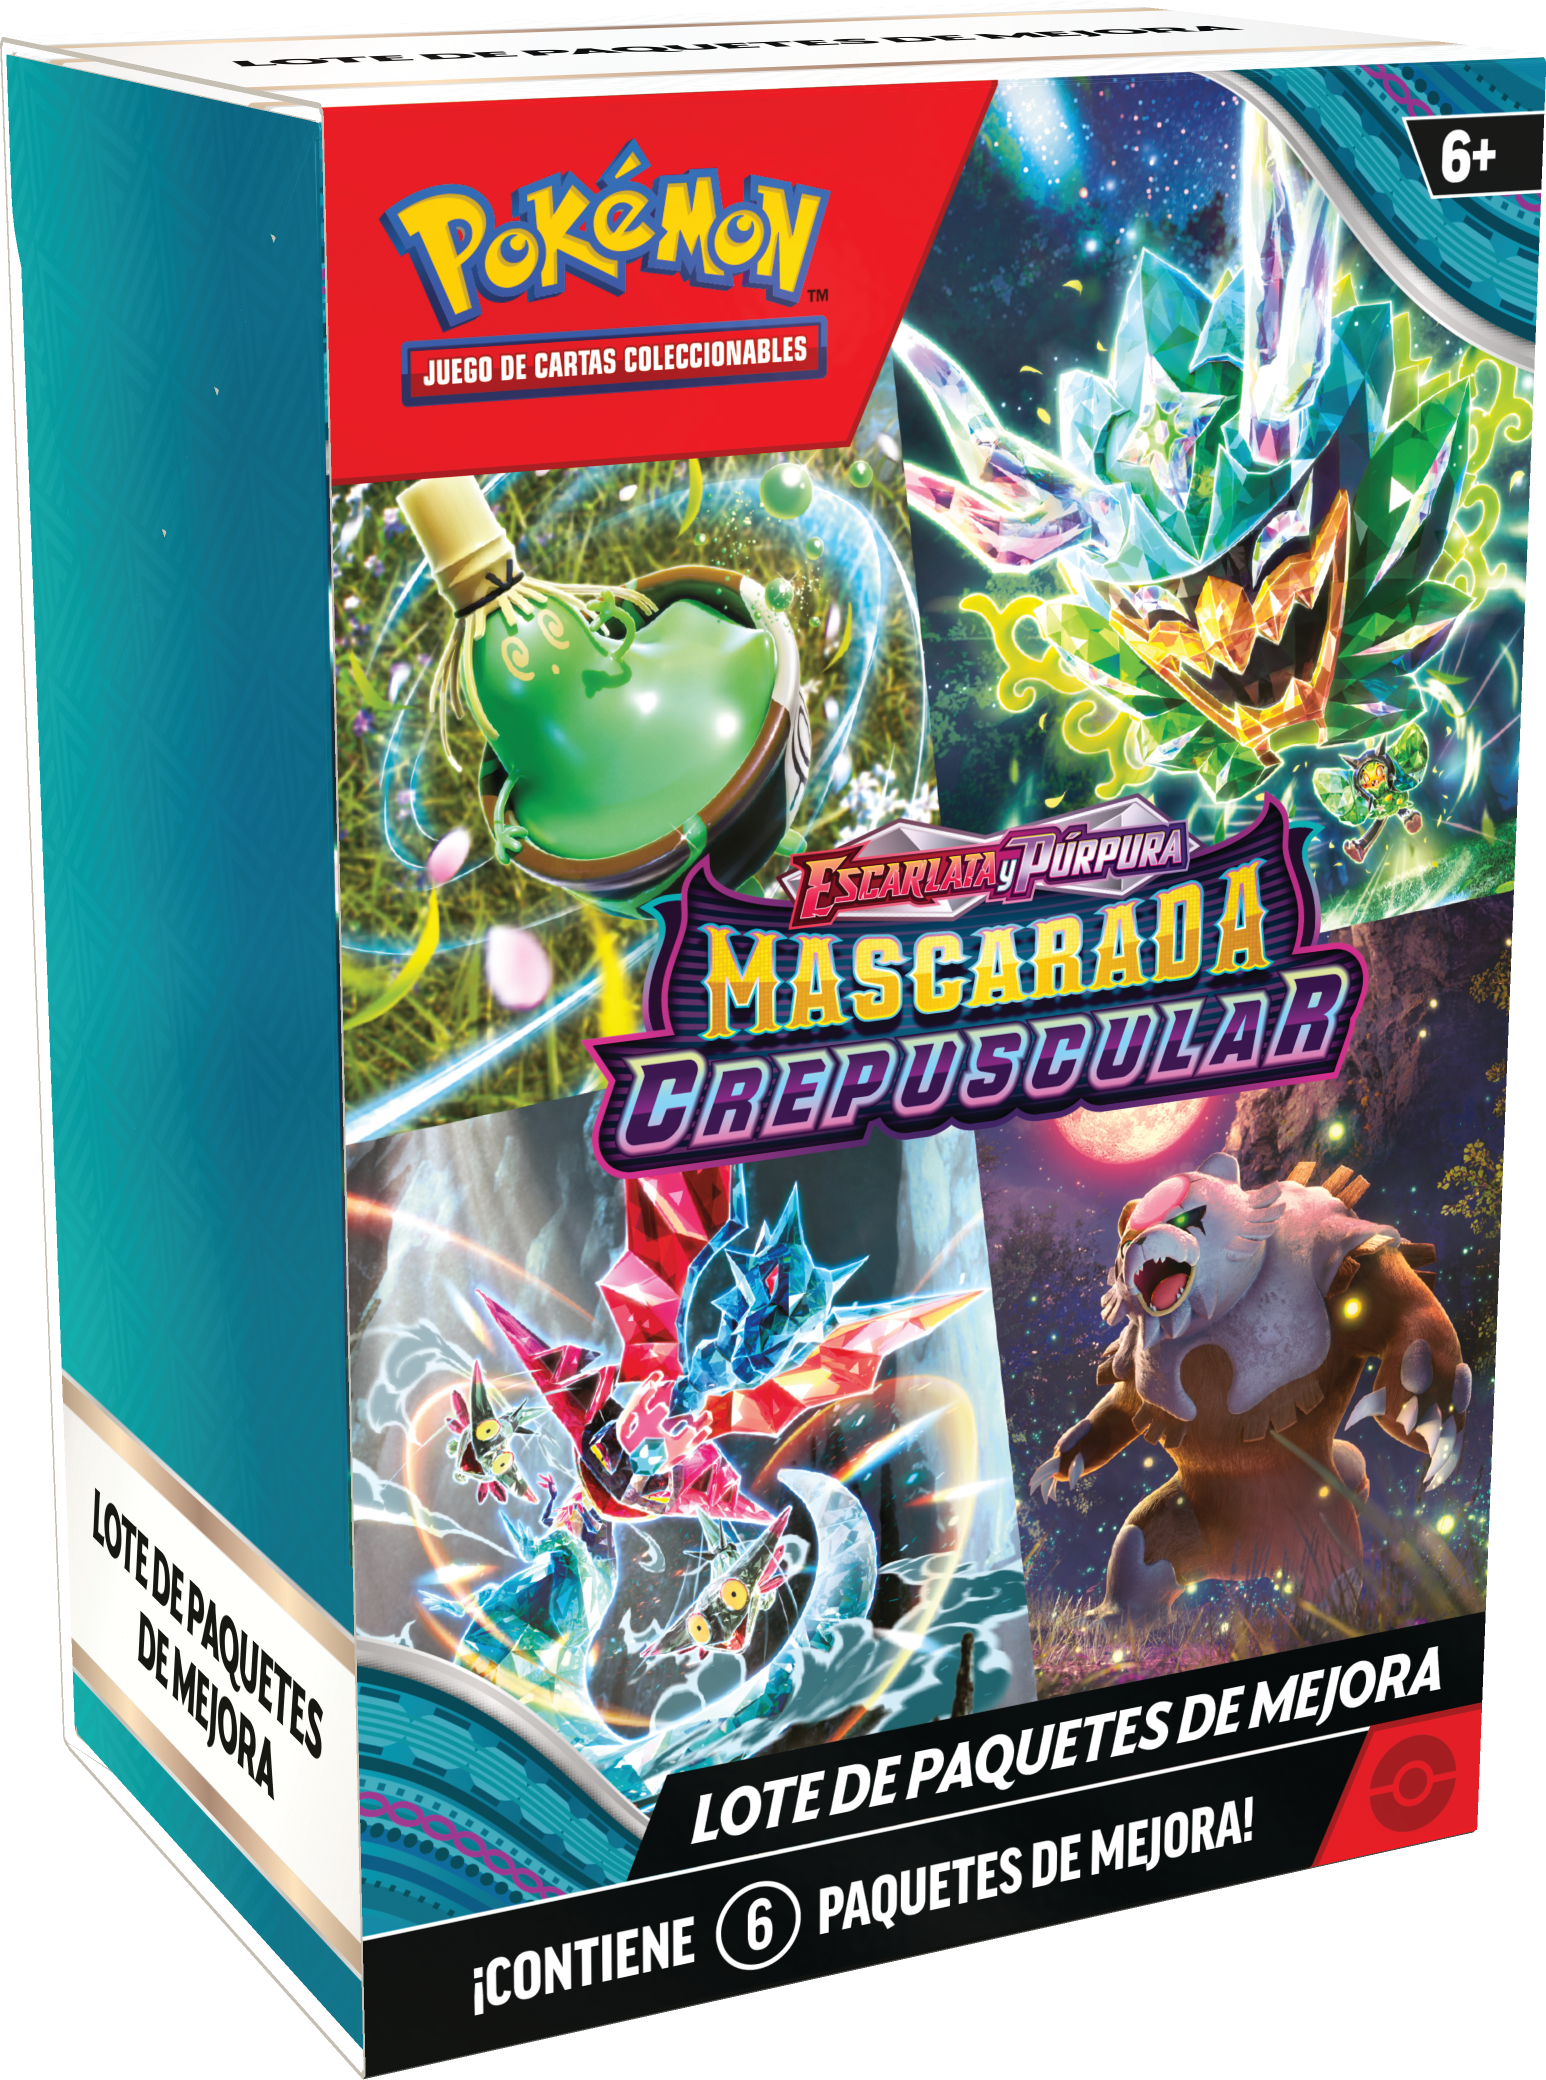 Pokemon TCG Escarlata y Purpura: Mascarada Crepuscular - Booster Bundle 6 Pack En Español